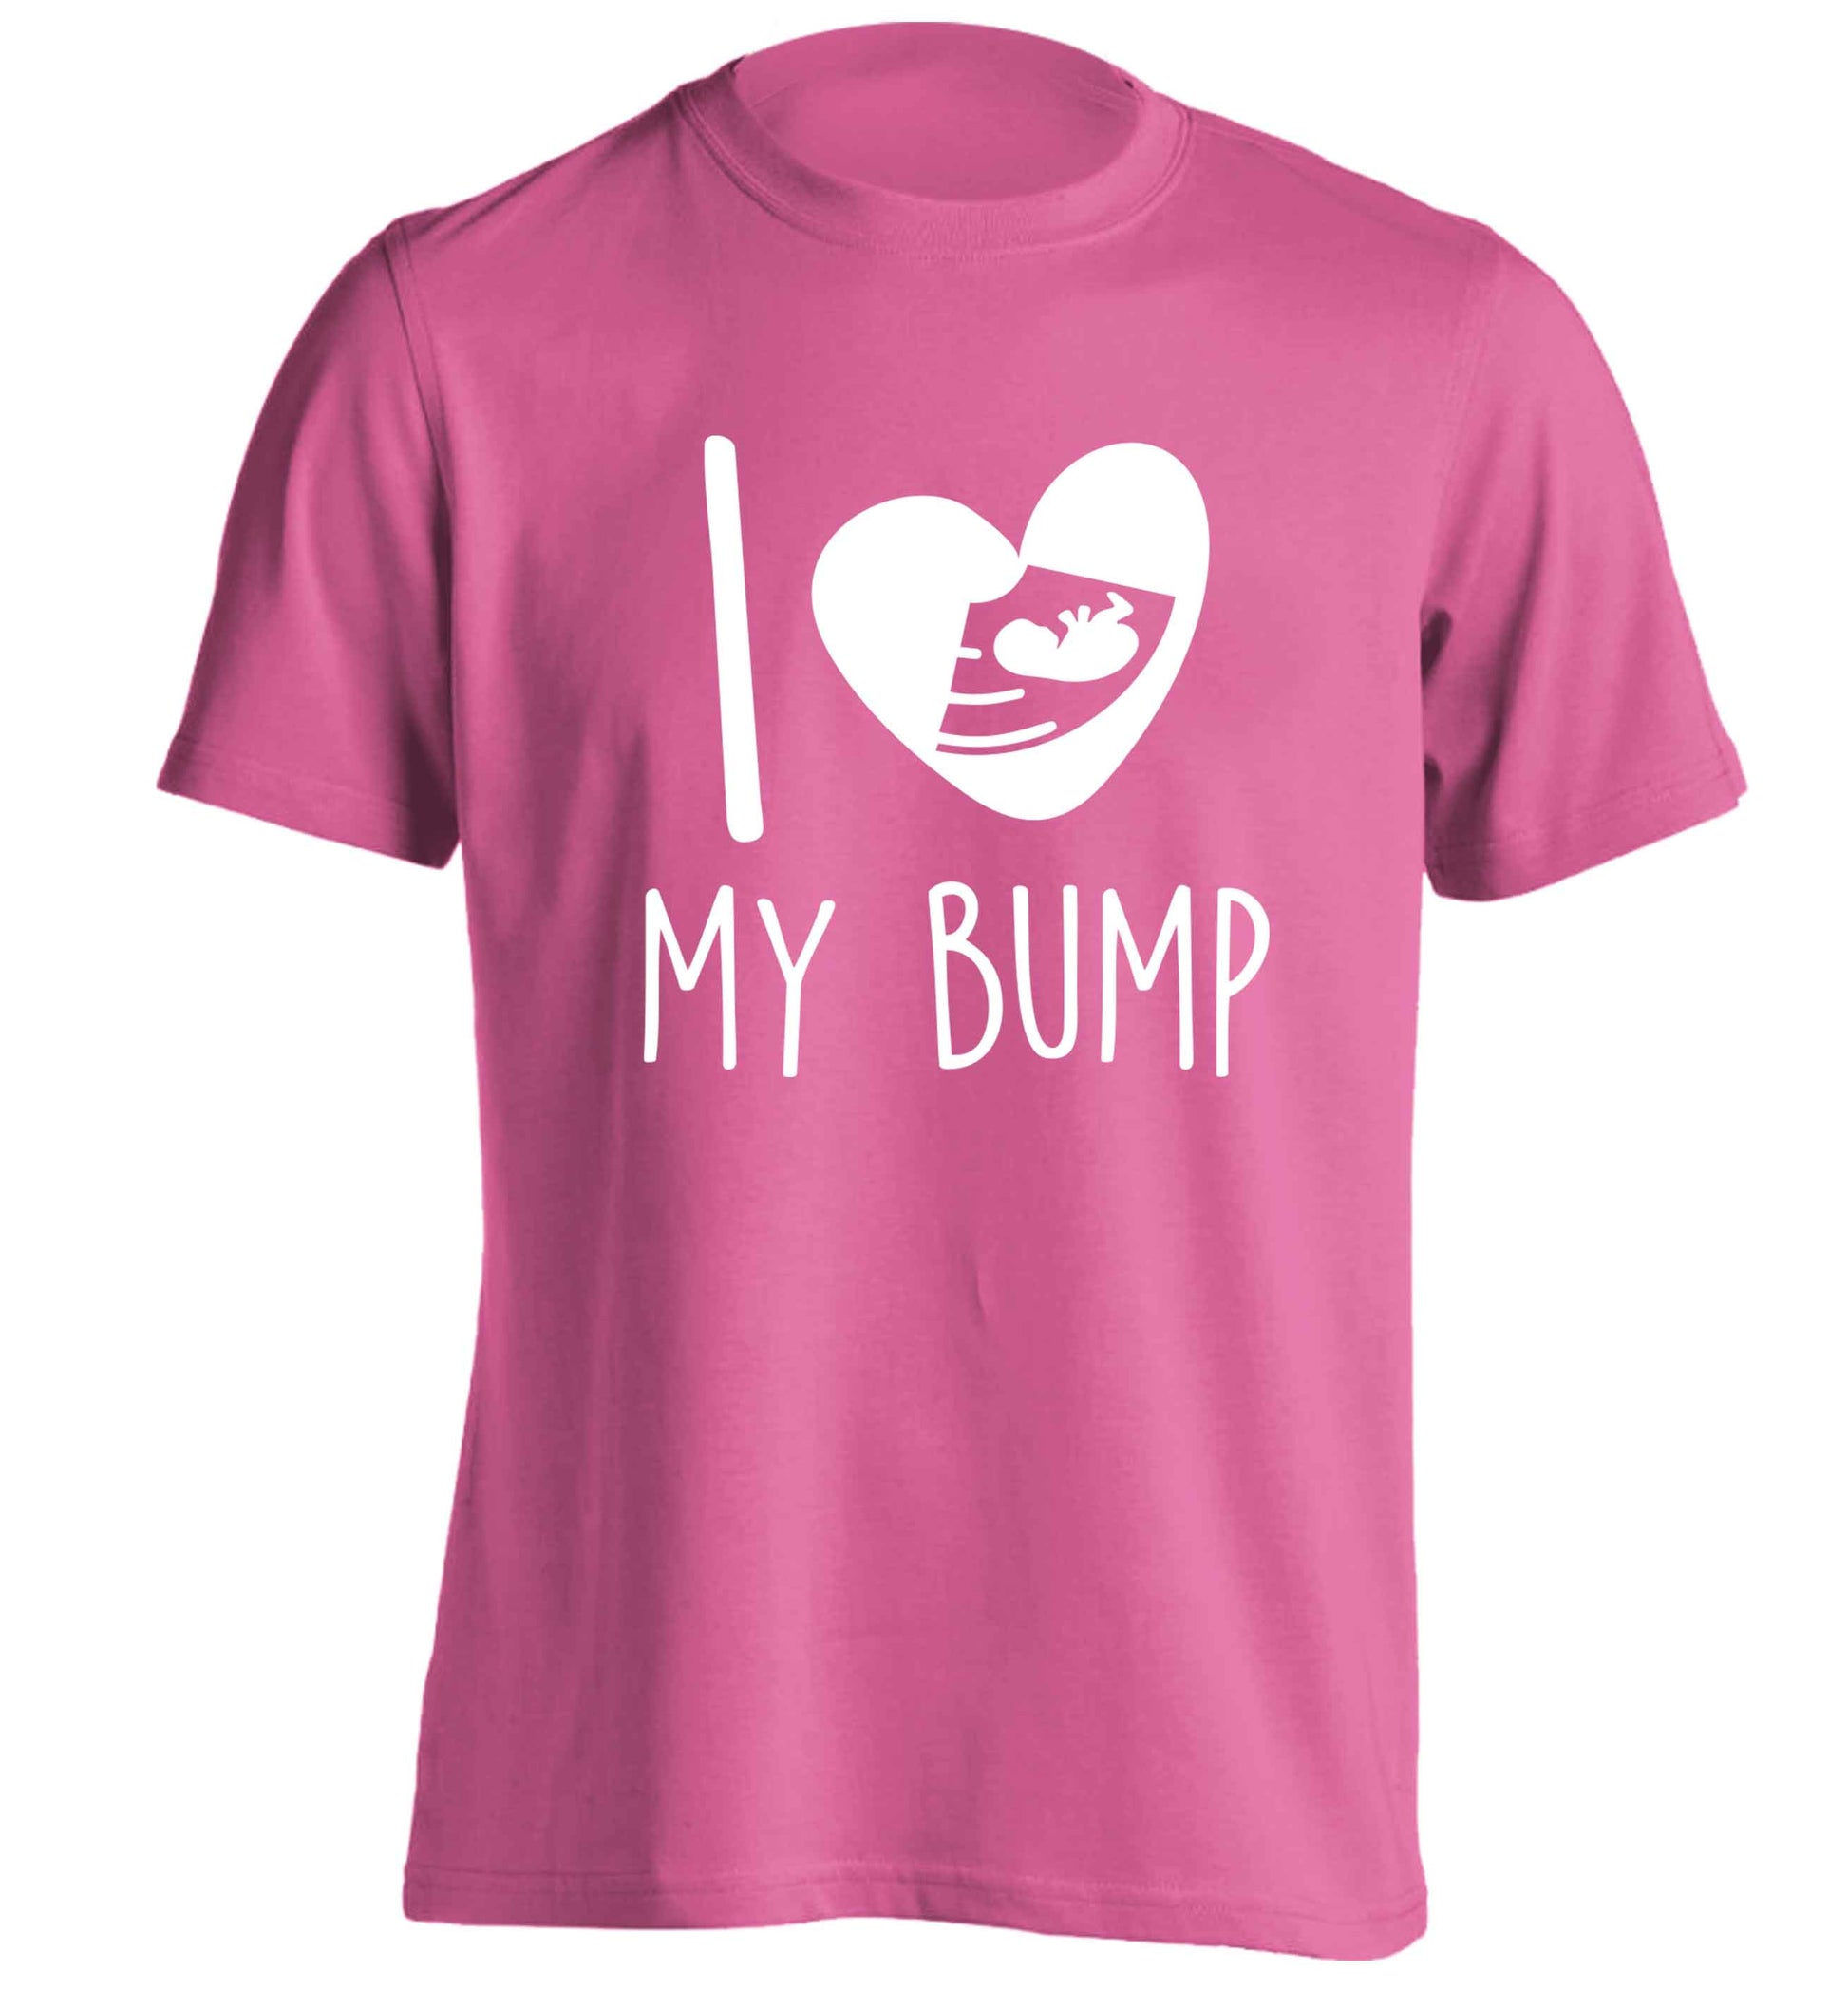 I love my bump adults unisex pink Tshirt 2XL